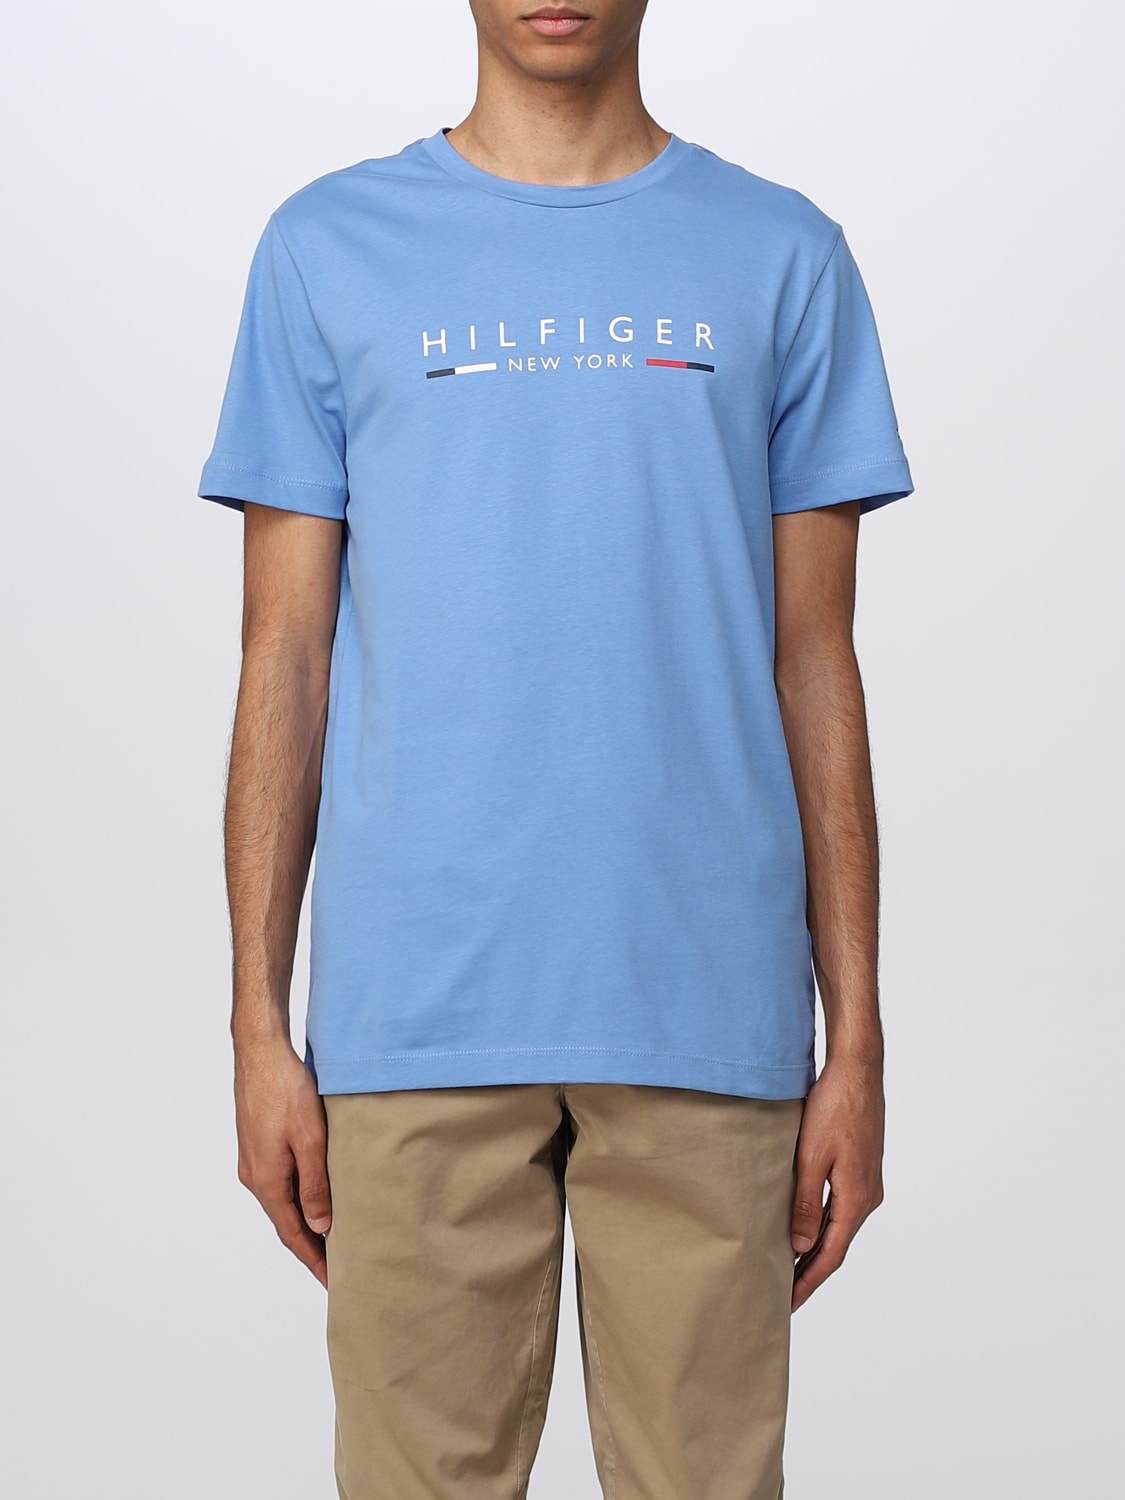 HILFIGER: Camiseta para Claro | Camiseta Tommy Hilfiger MW0MW29372 en línea en GIGLIO.COM